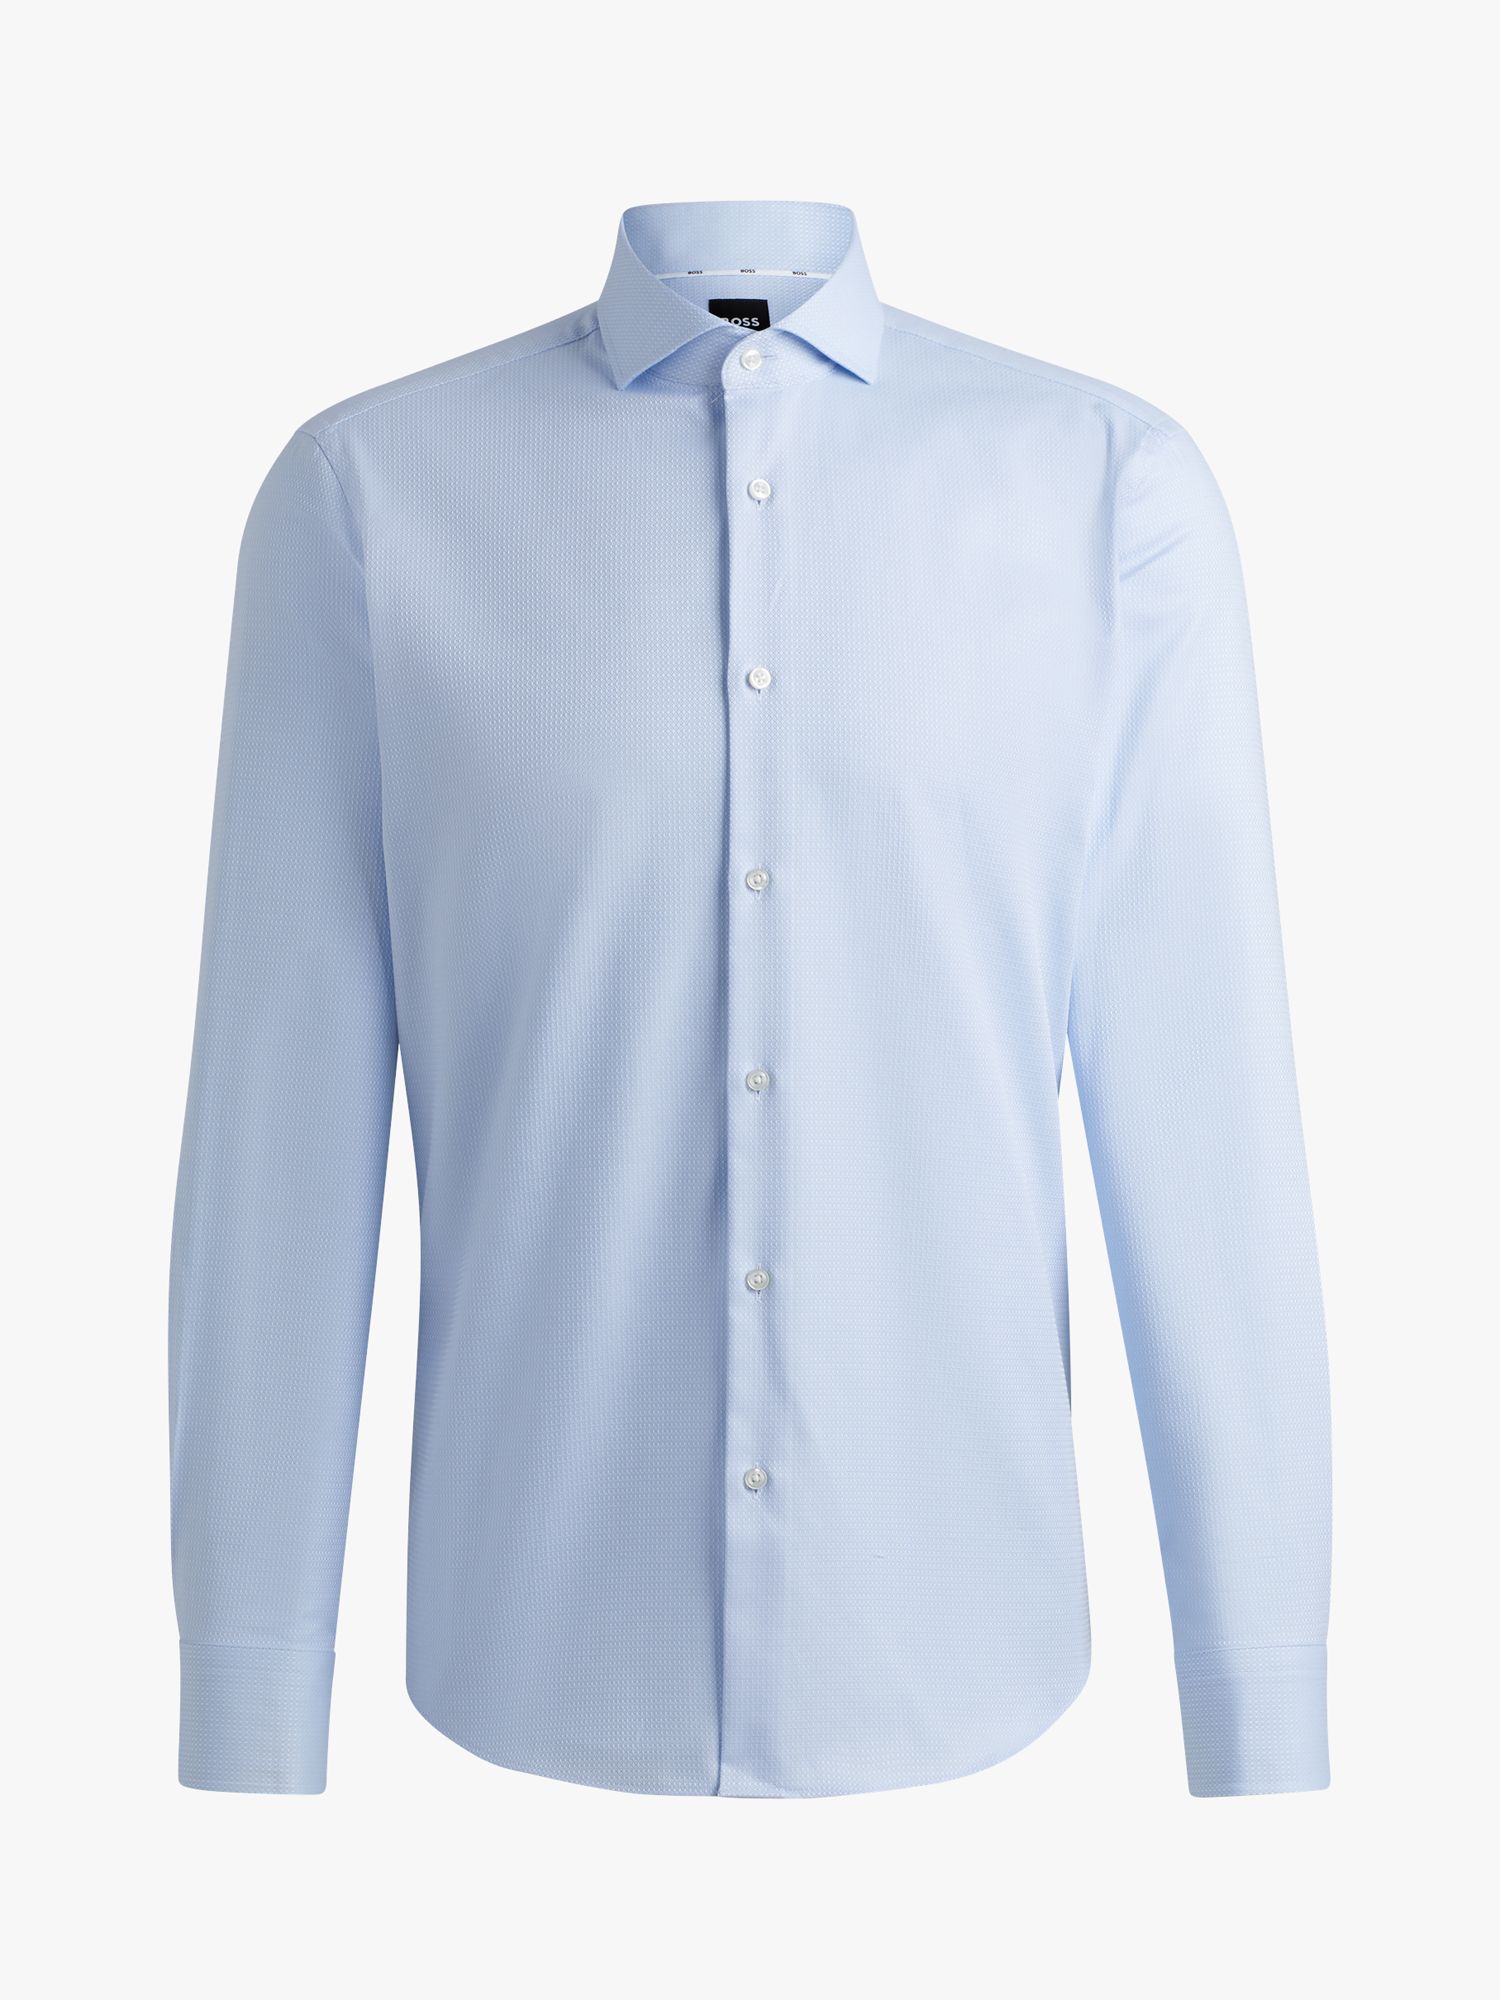 BOSS H-Joe Spread Long Sleeve Shirt, Blue, 17.75L